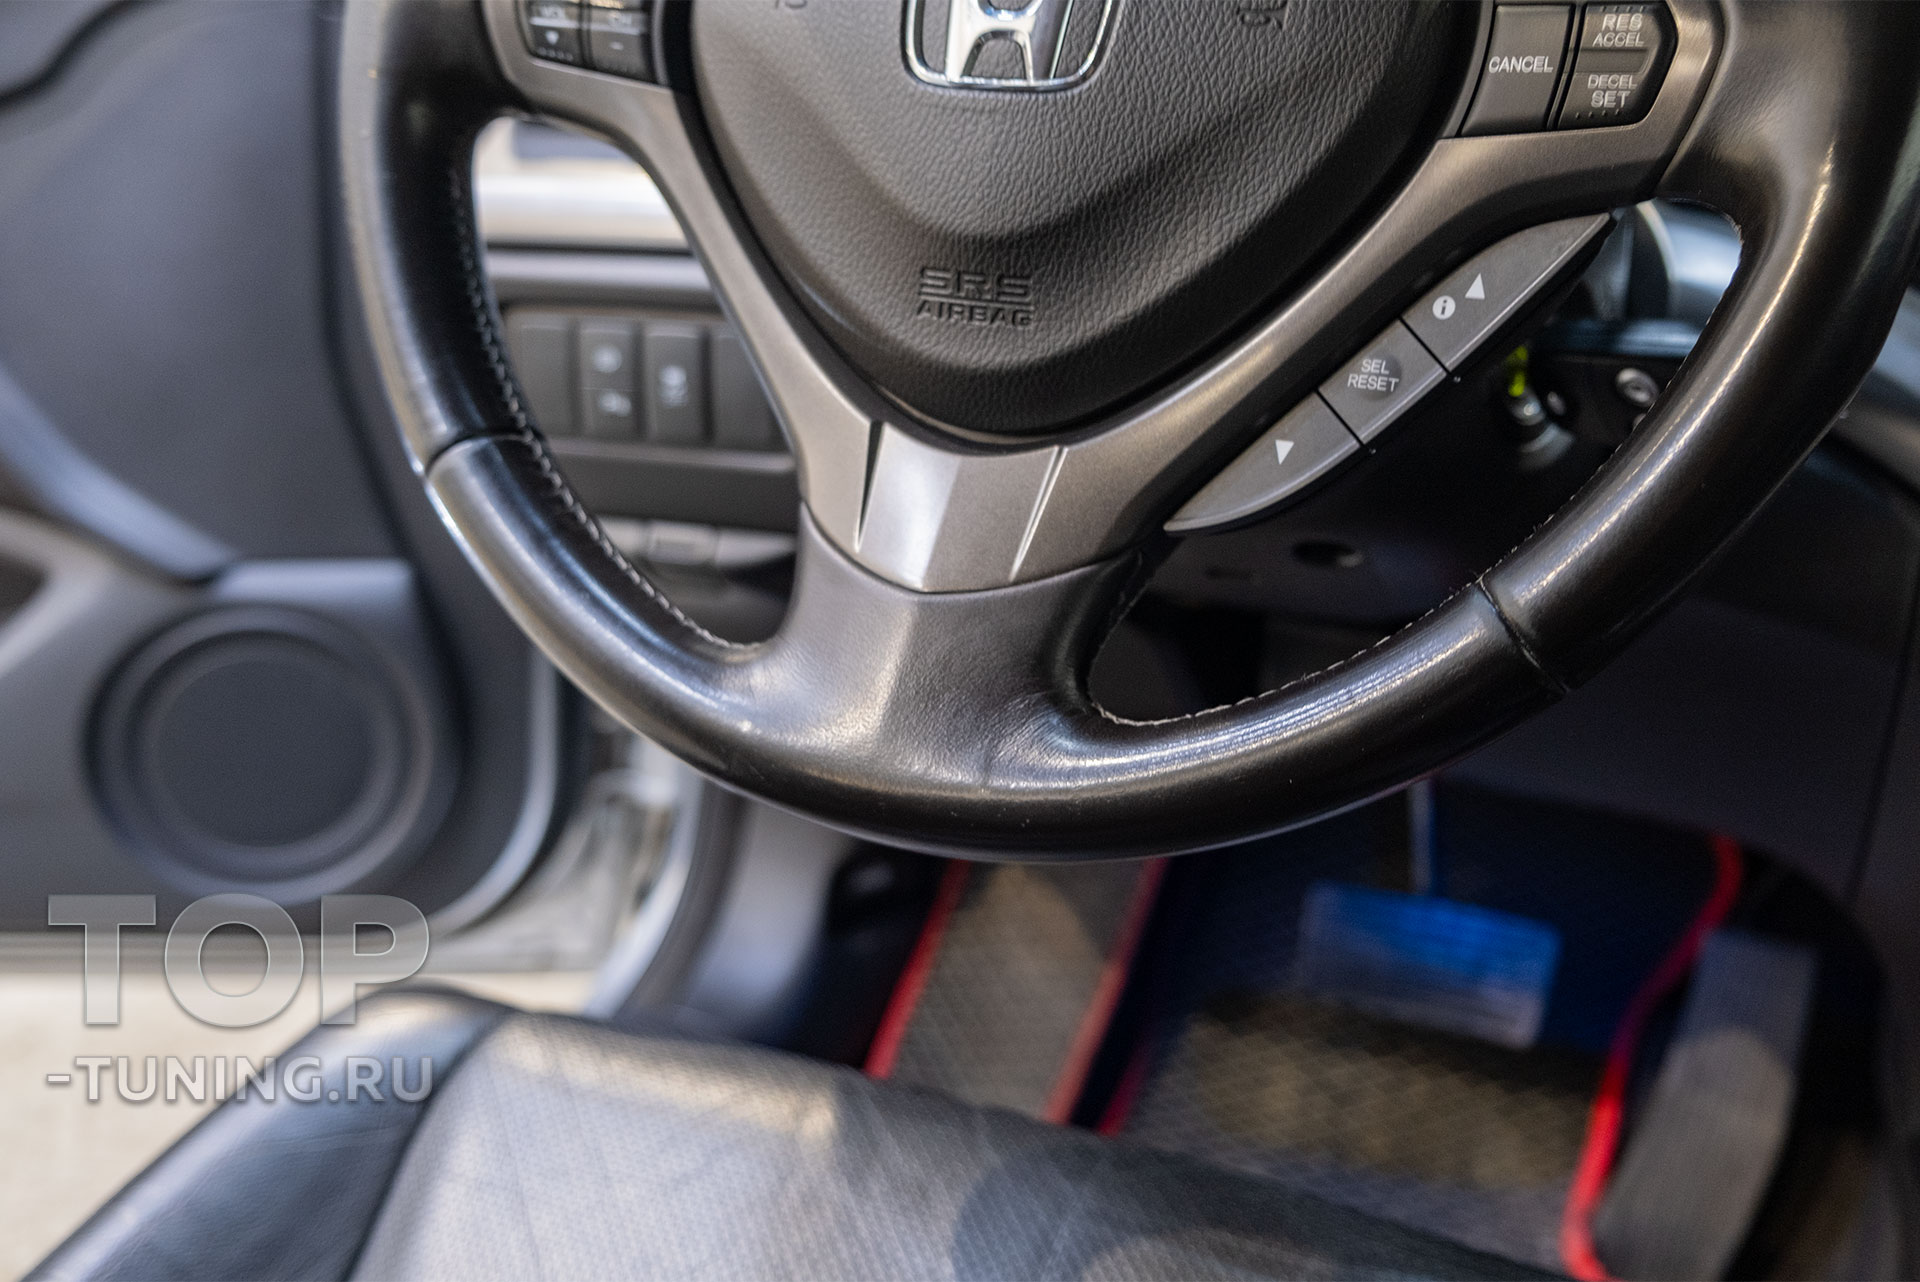 108362 Тюнинг руля для Honda Accord VIII: старый руль в трейд-ин